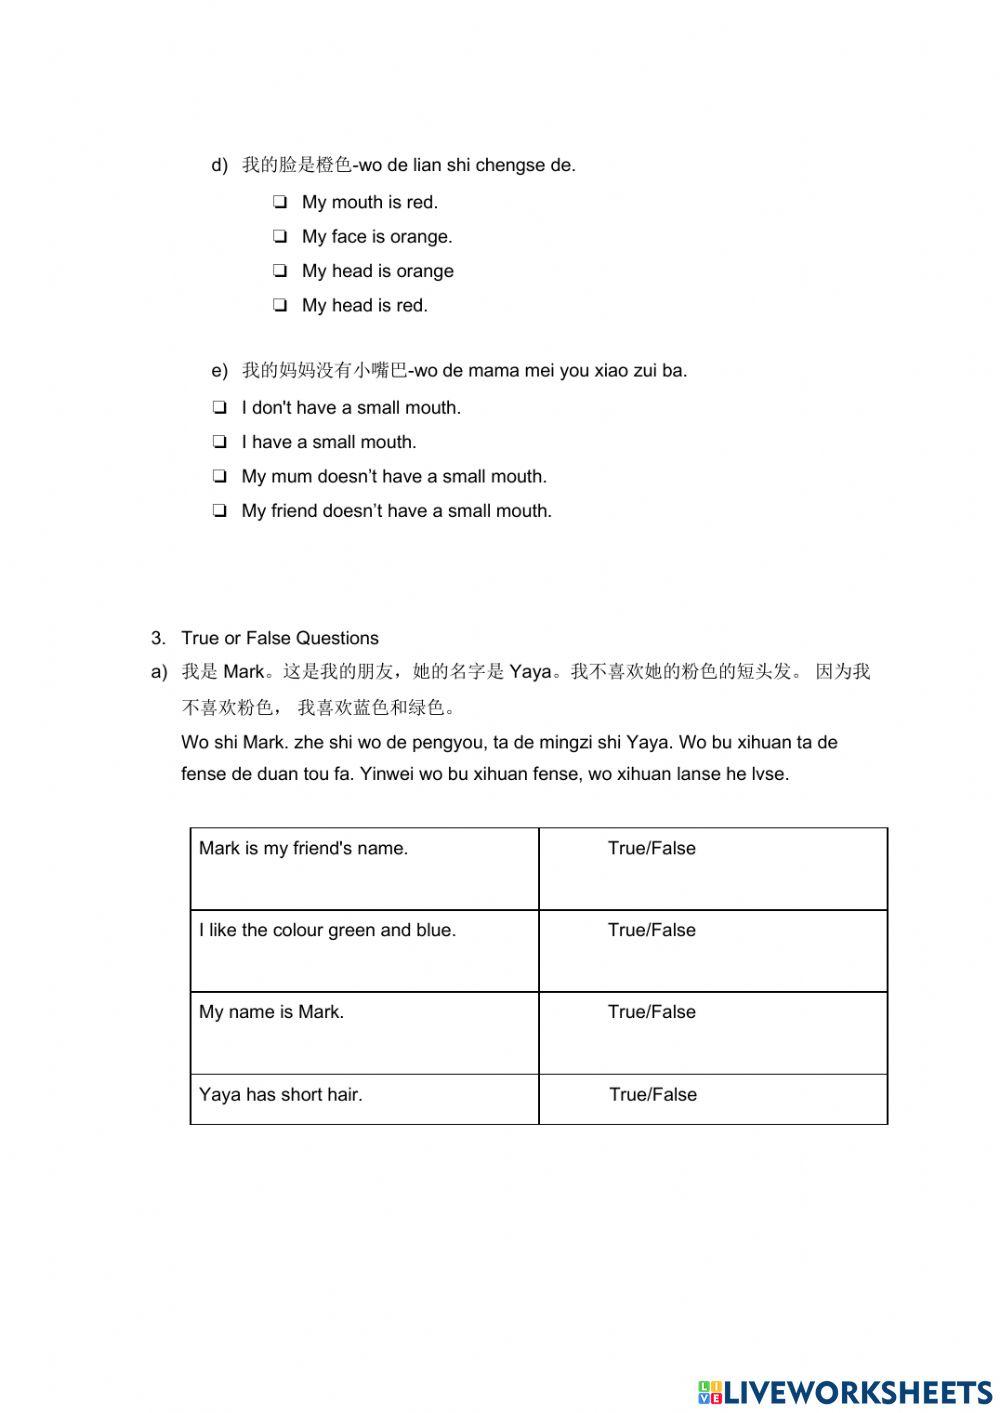 9-10 worksheet